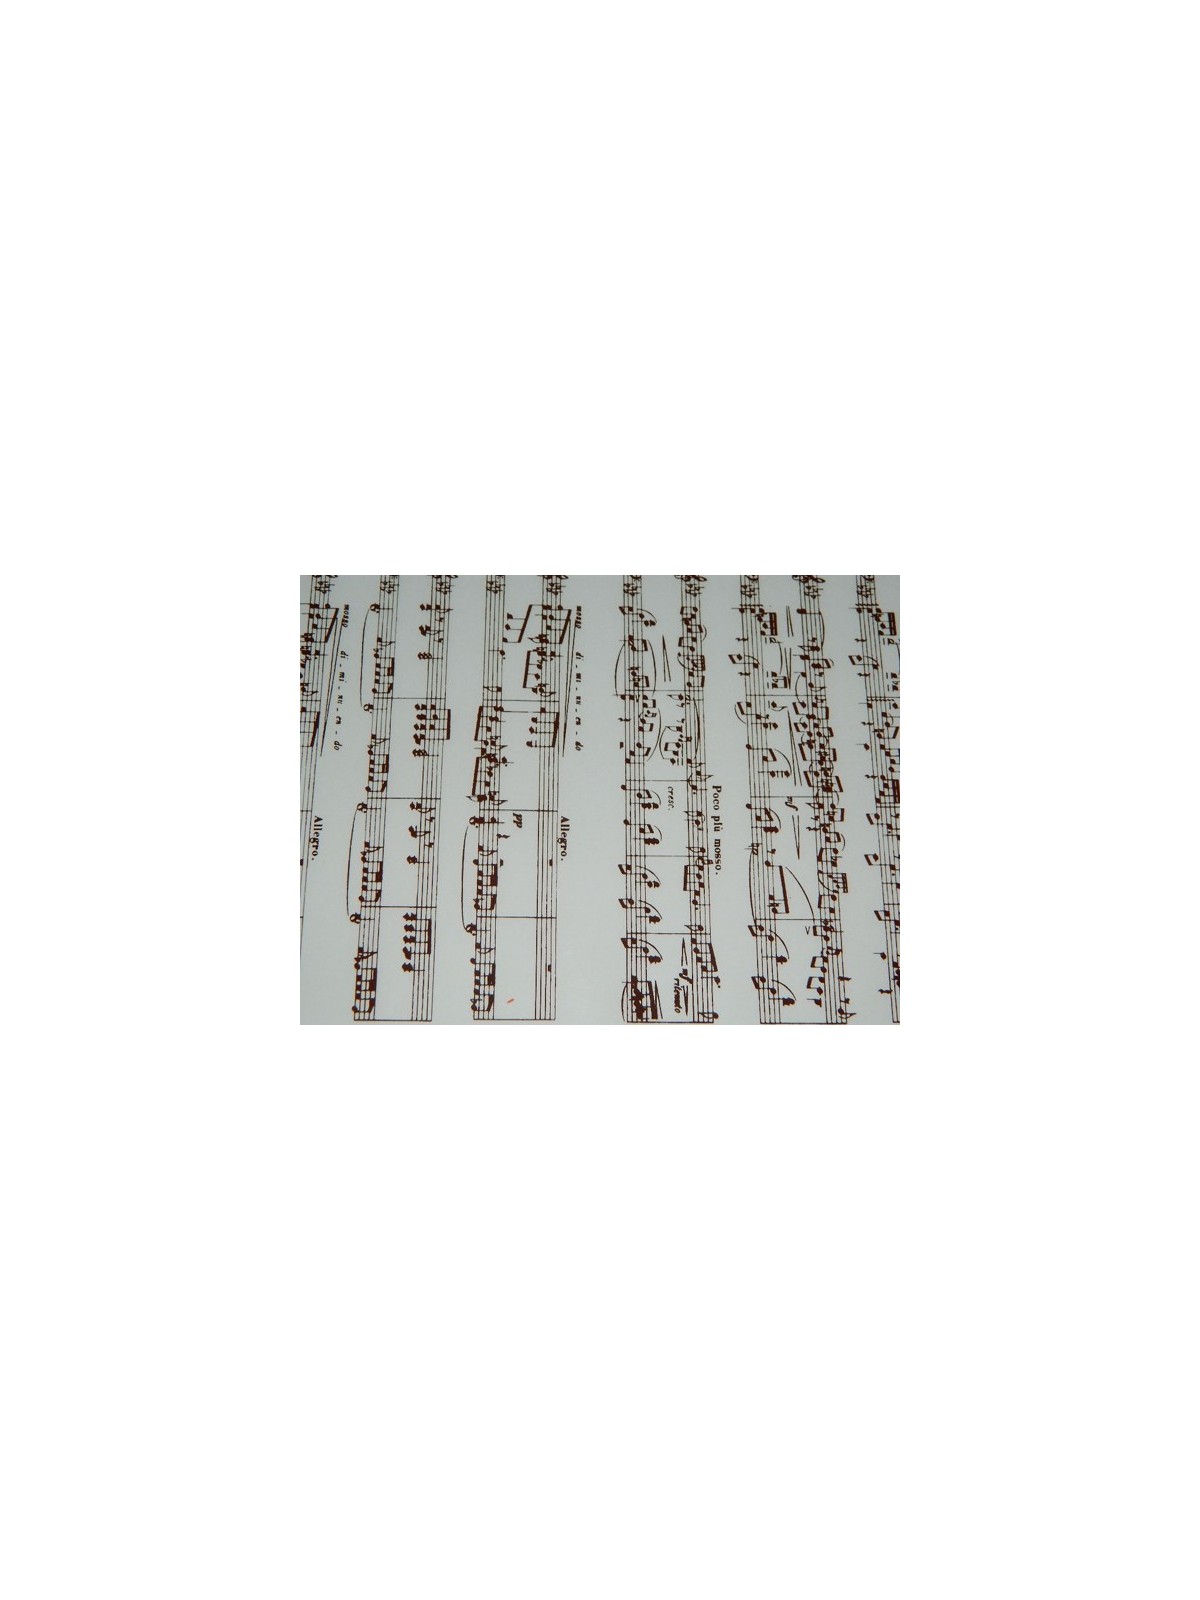 P.C.B Transfer sheet for chocolate music dark "Notes de Musique" 40x25cm